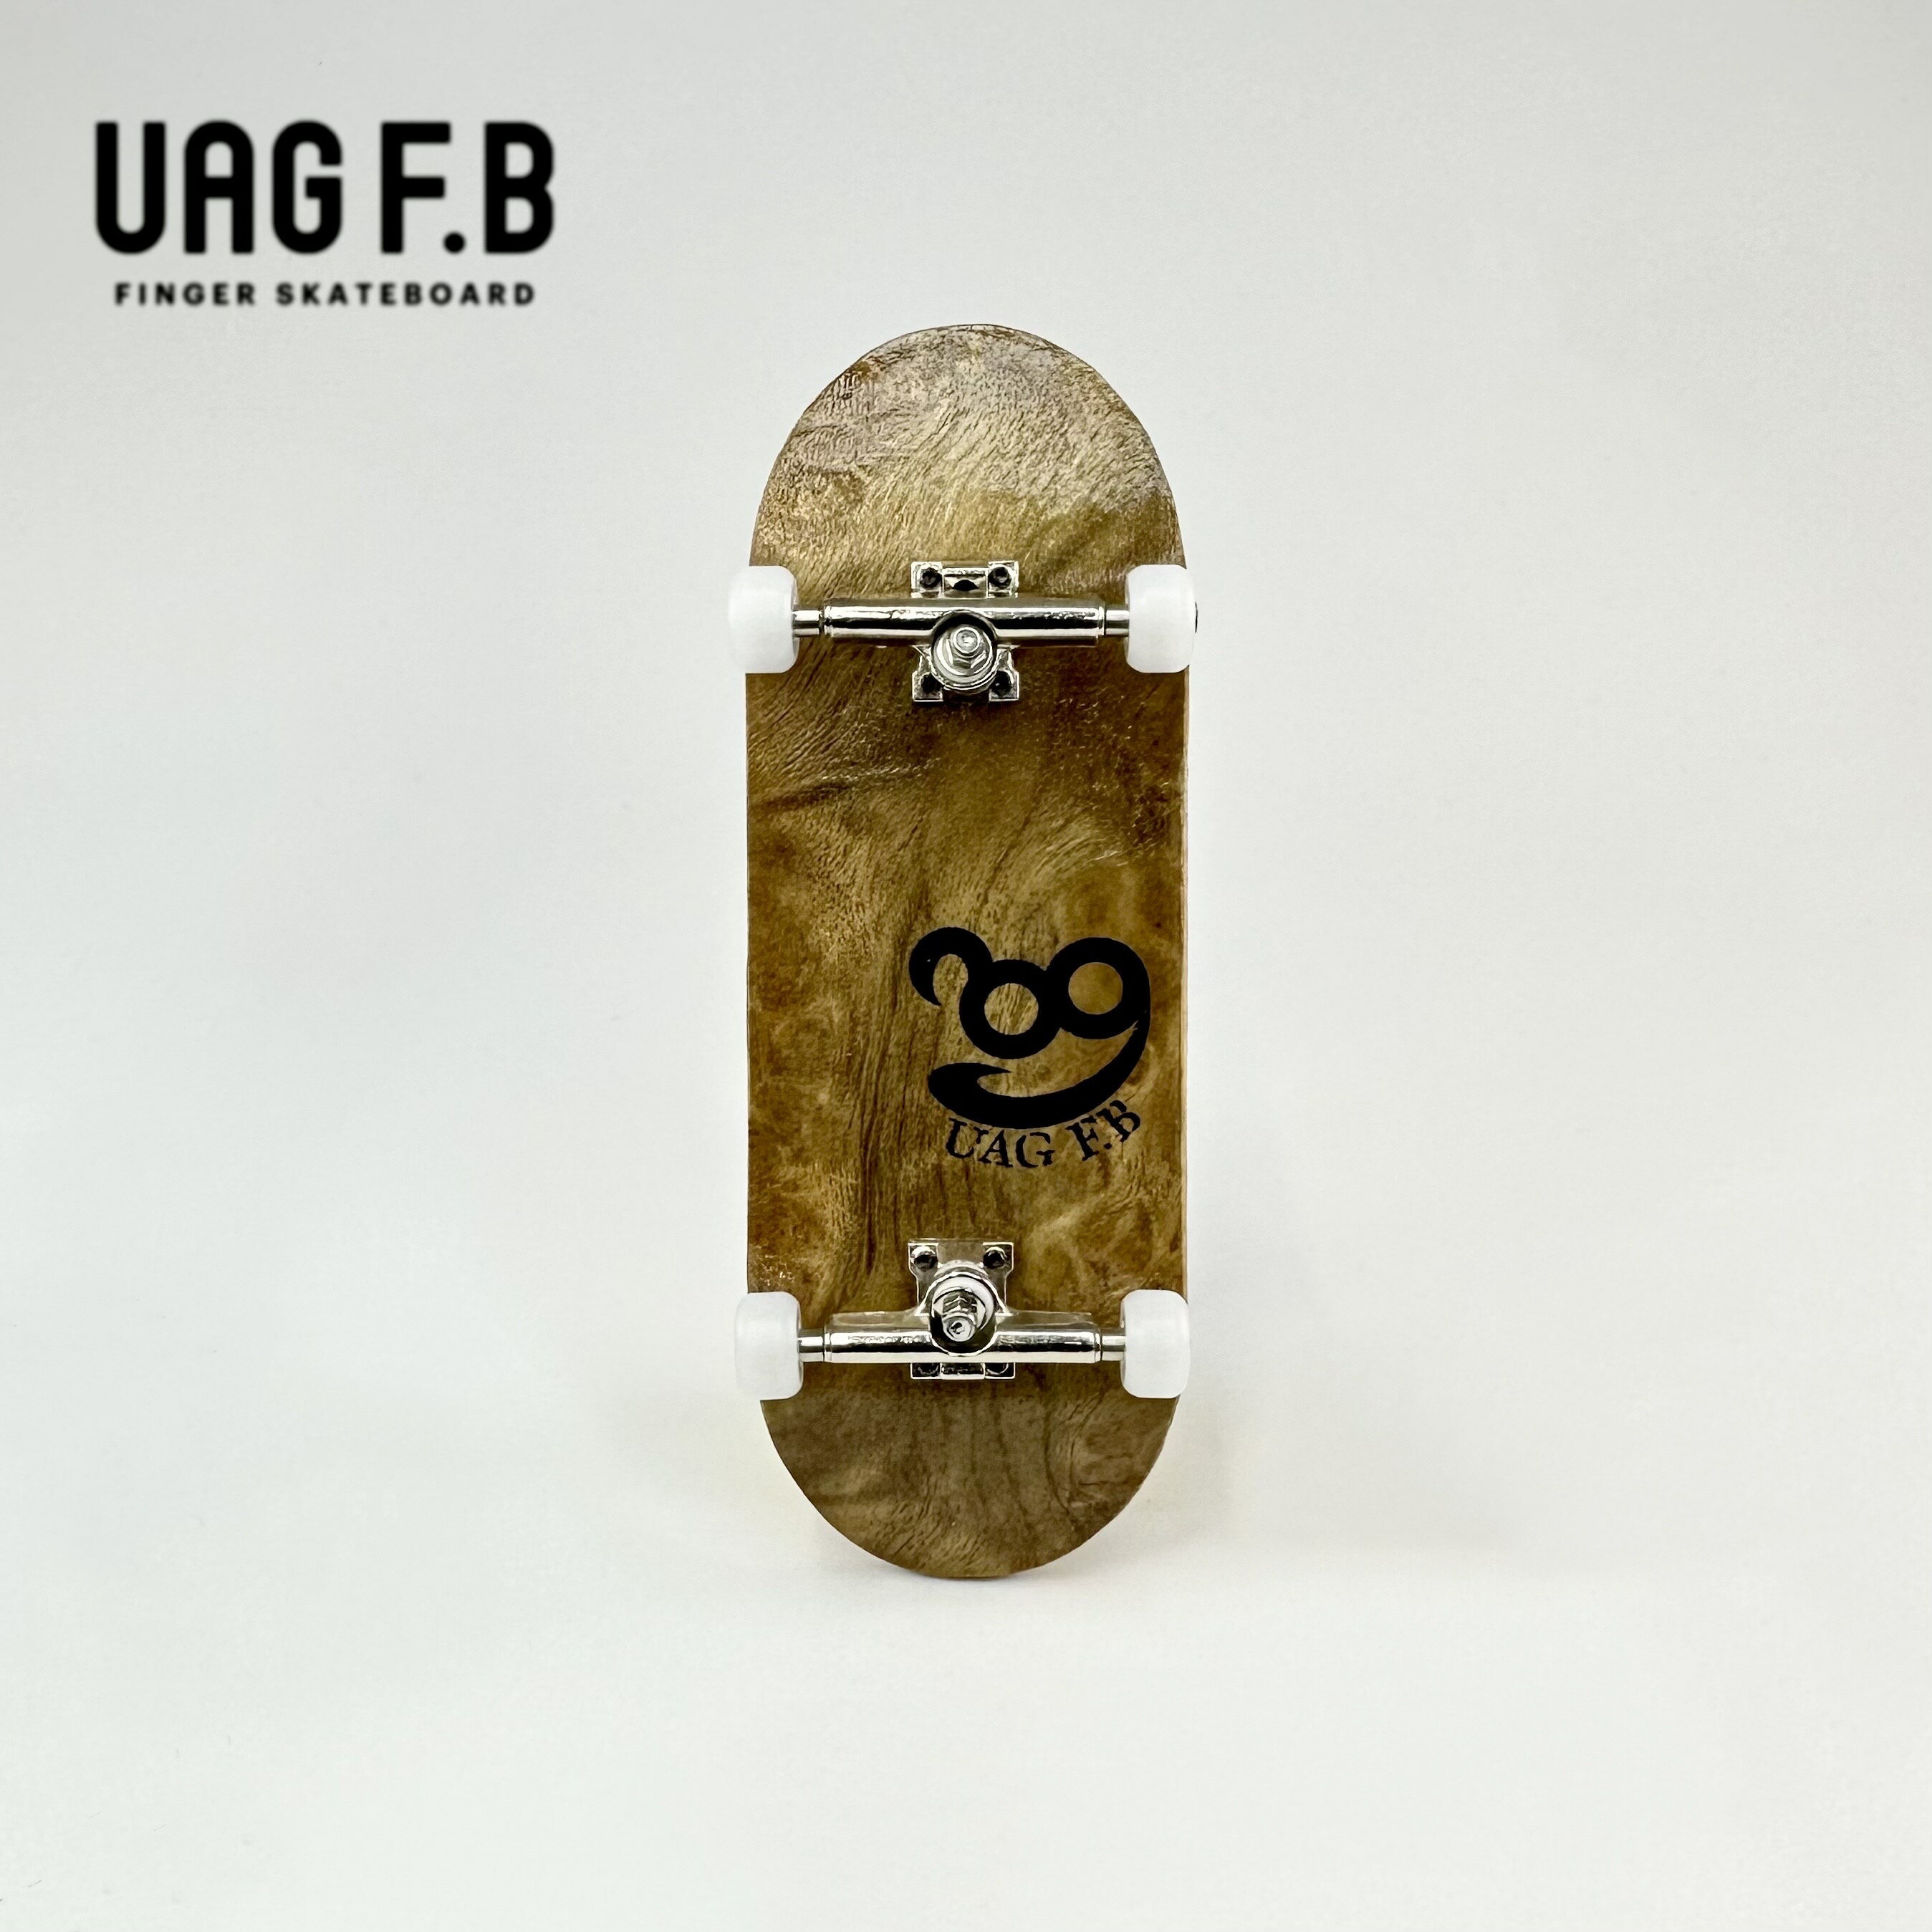 UAG F.B コンプリート / Simple / Birds eye/ slim / finger skate board / 指スケ / 指スケボー